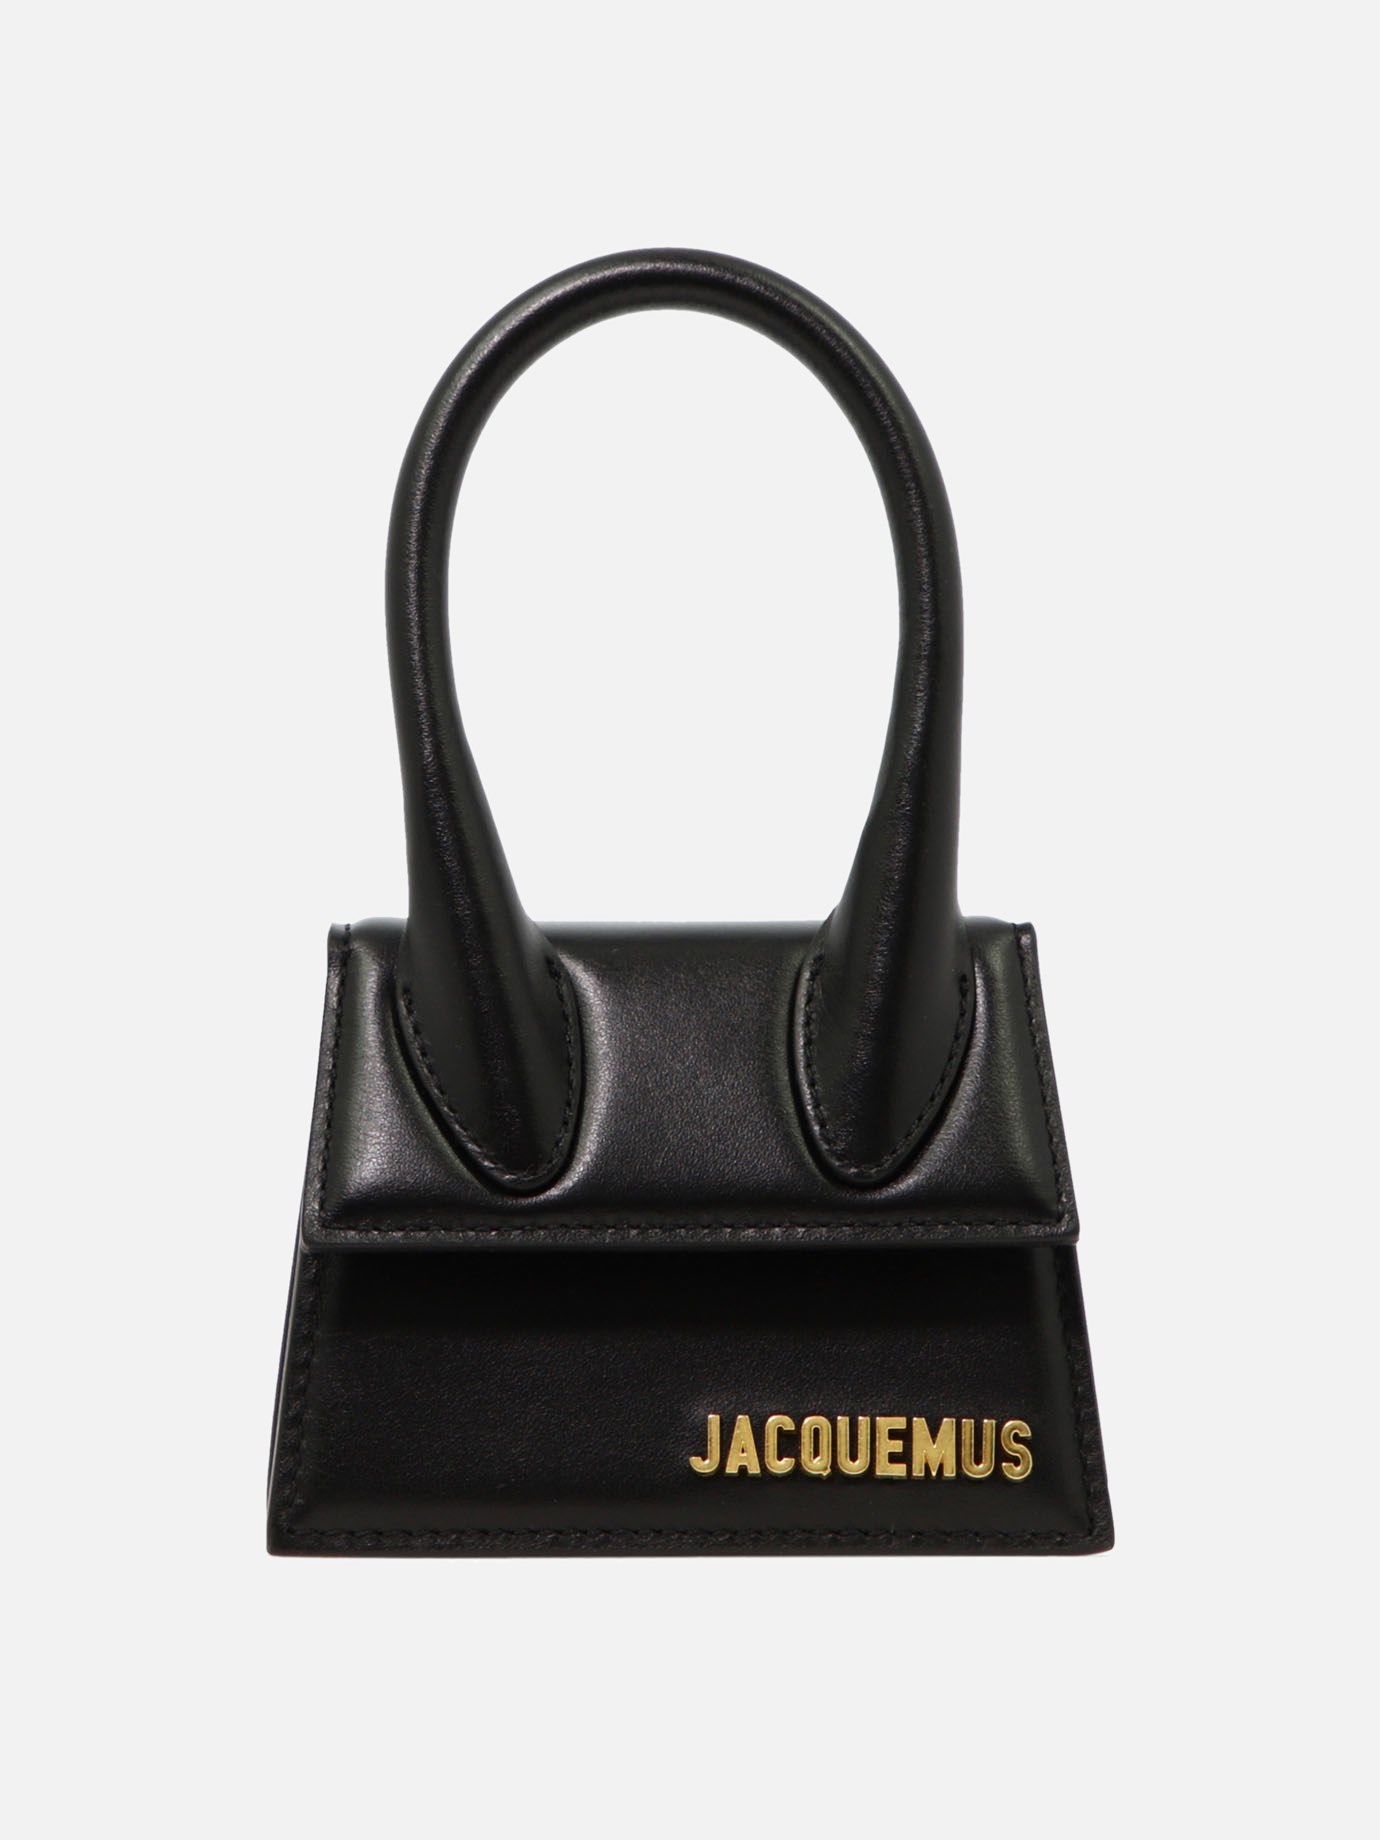  Le Chiquito  handbagby Jacquemus - 2